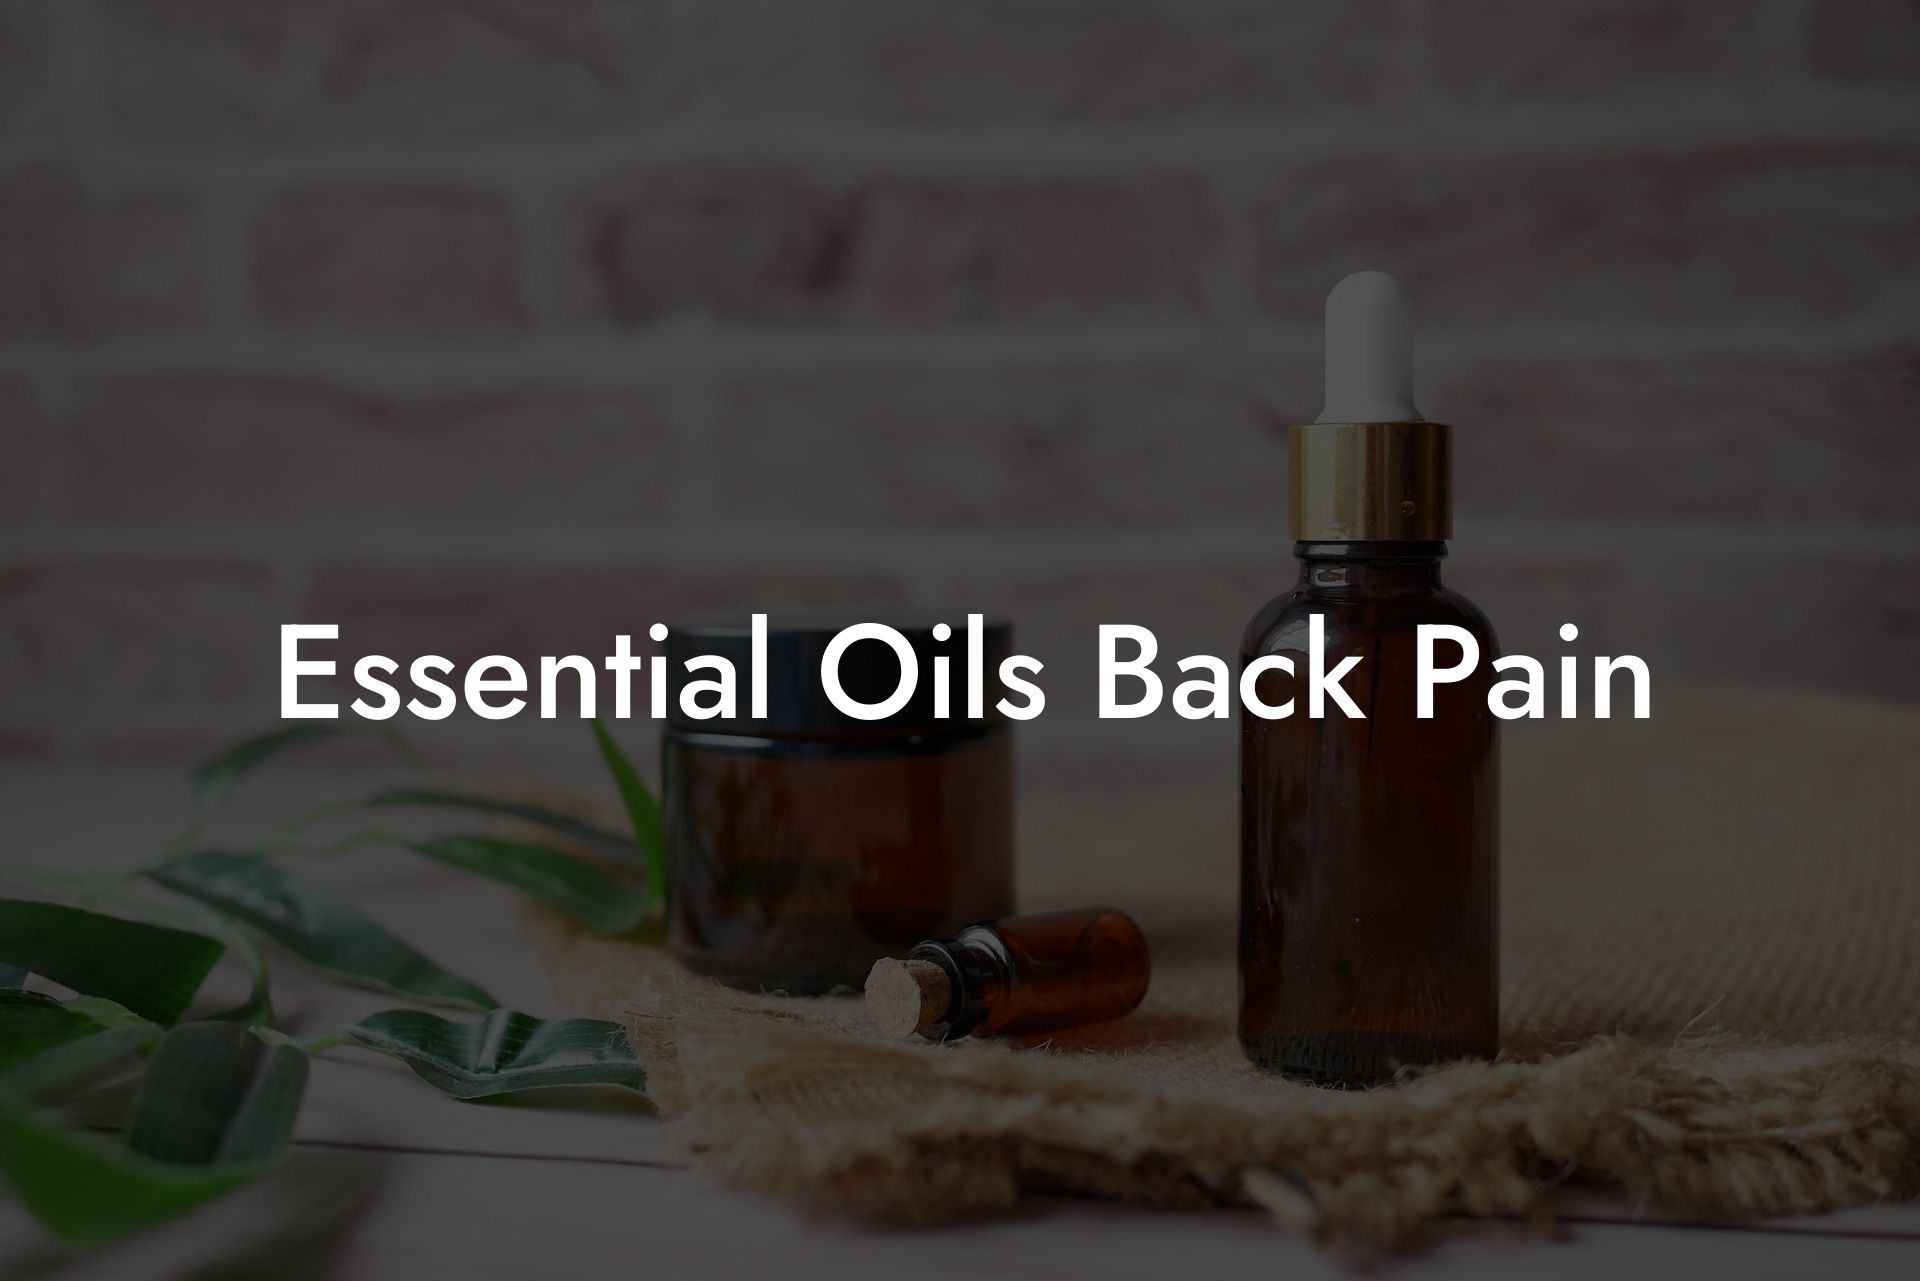 Essential Oils Back Pain